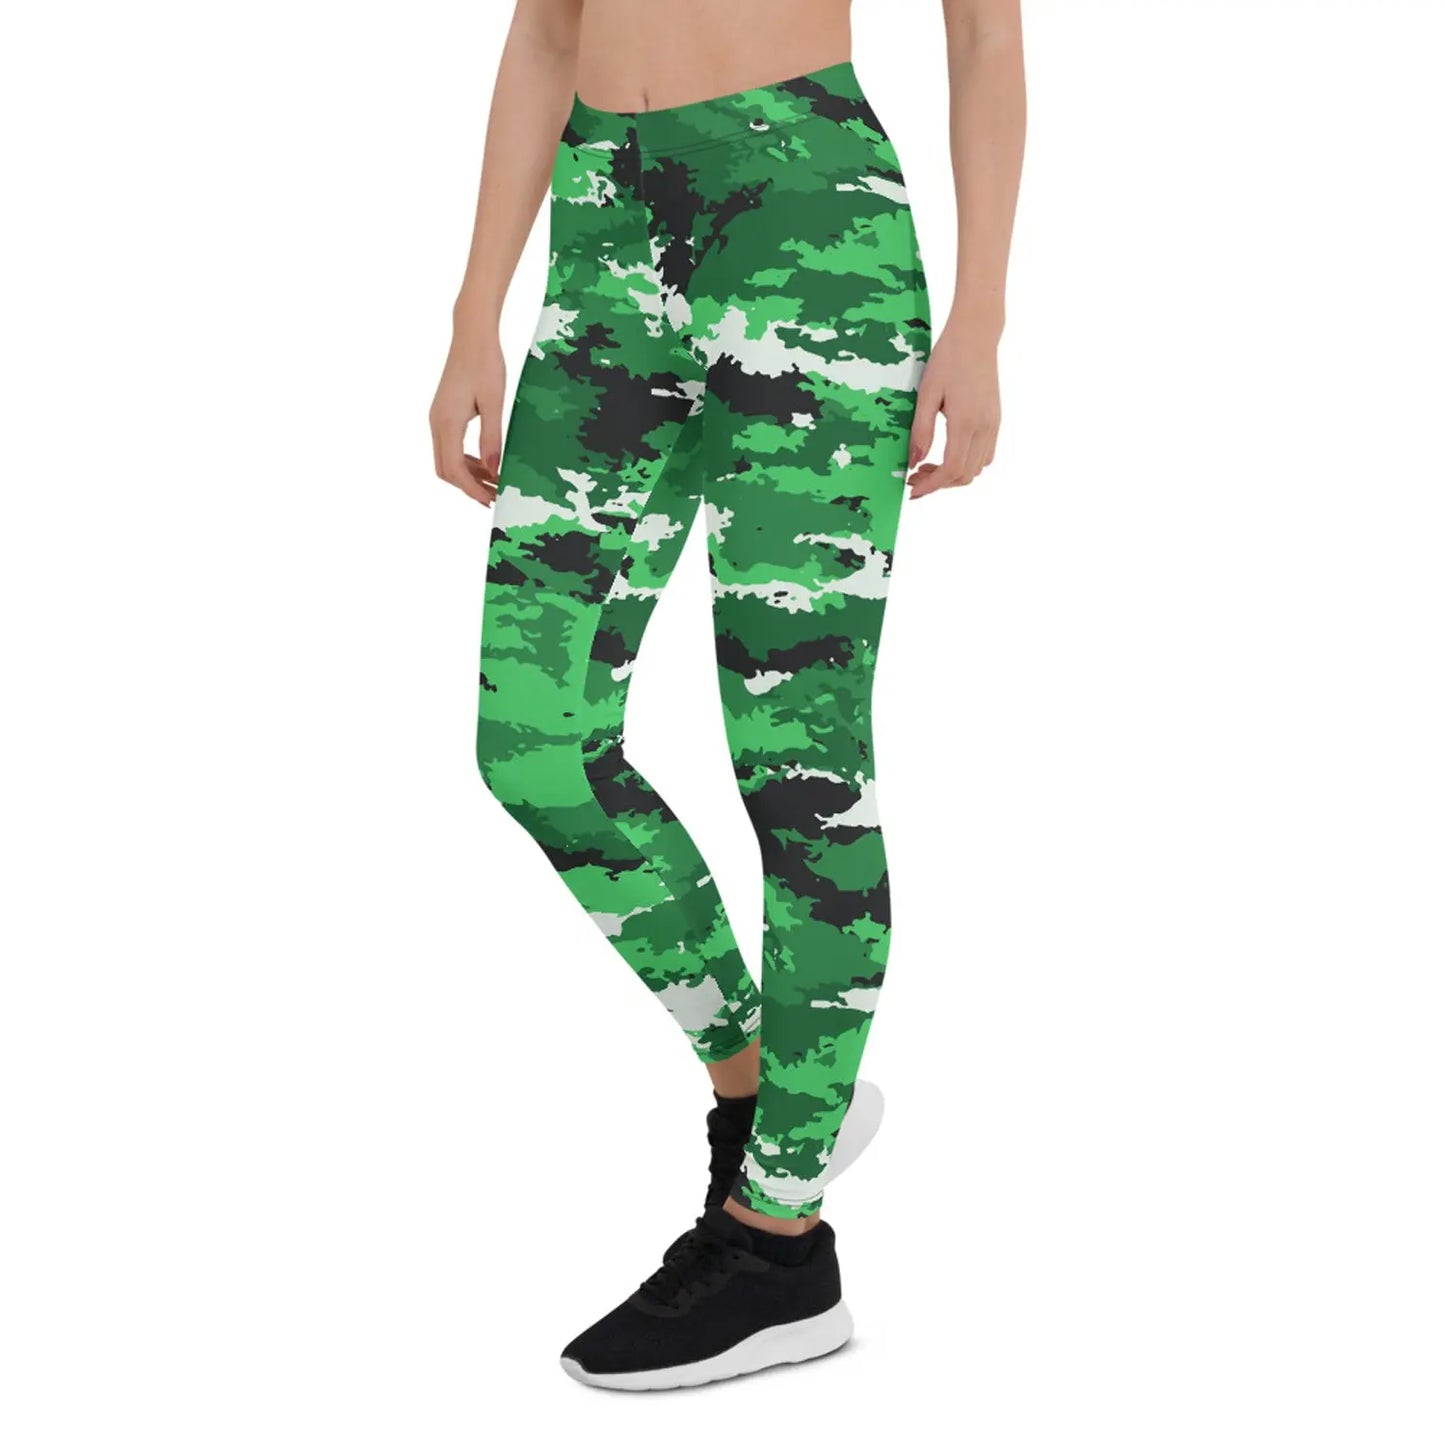 Green Camo Leggings for Women  Apparel & Accessories > Clothing > Activewear 103.09 EZYSELLA SHOP